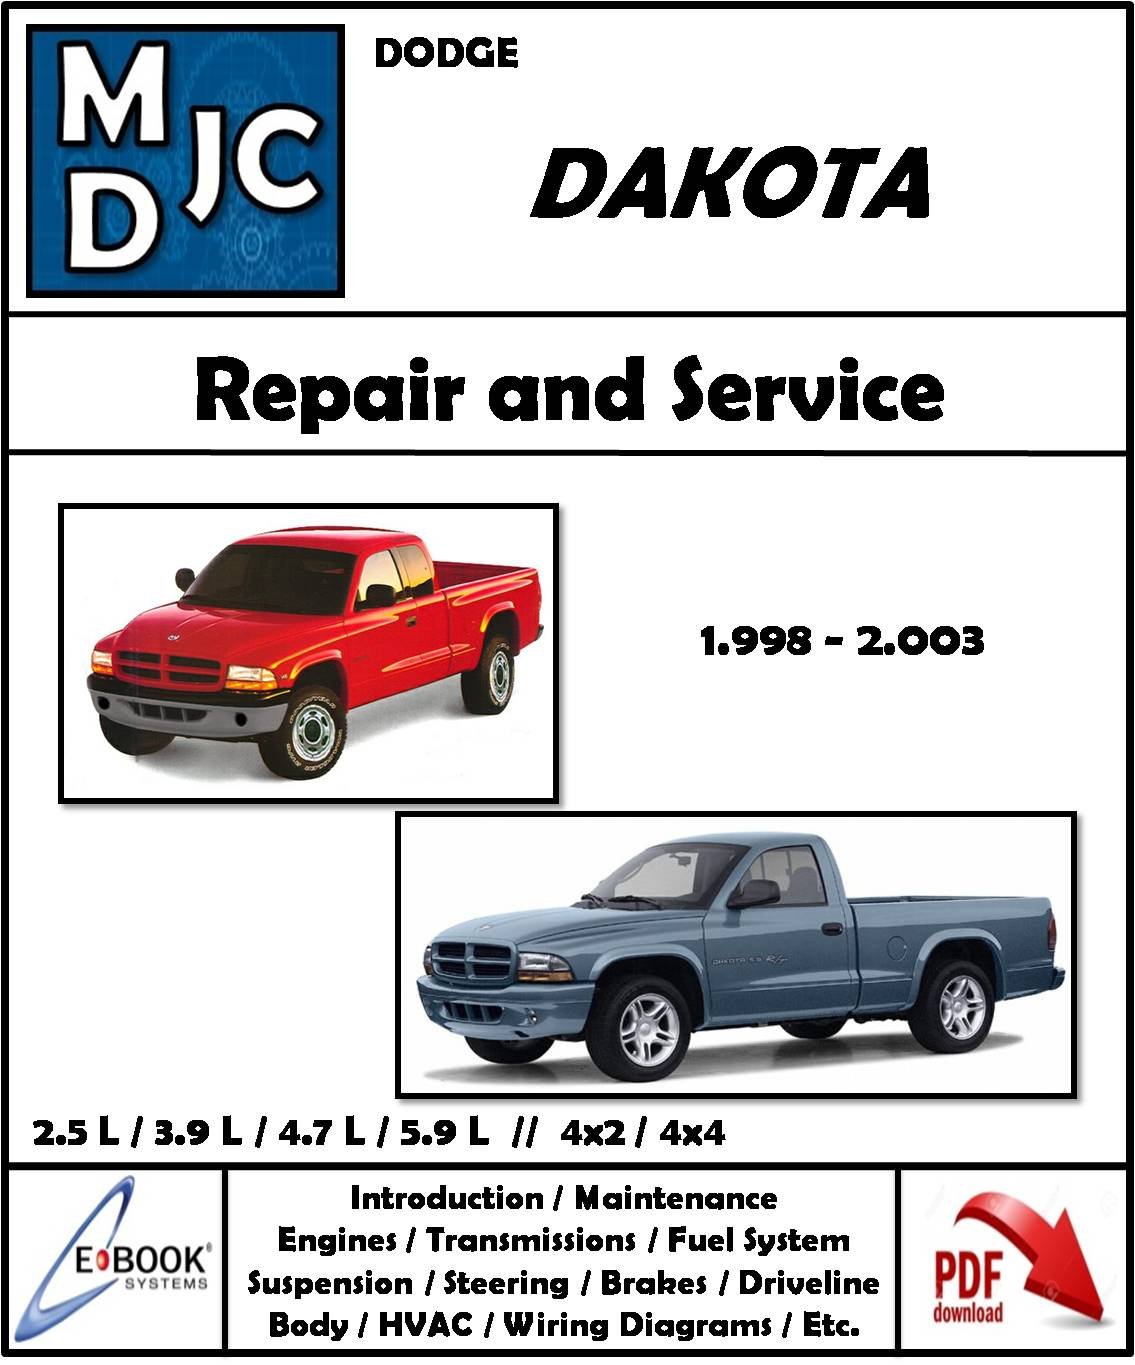 Manual de Taller Dodge Dakota 1998-2003